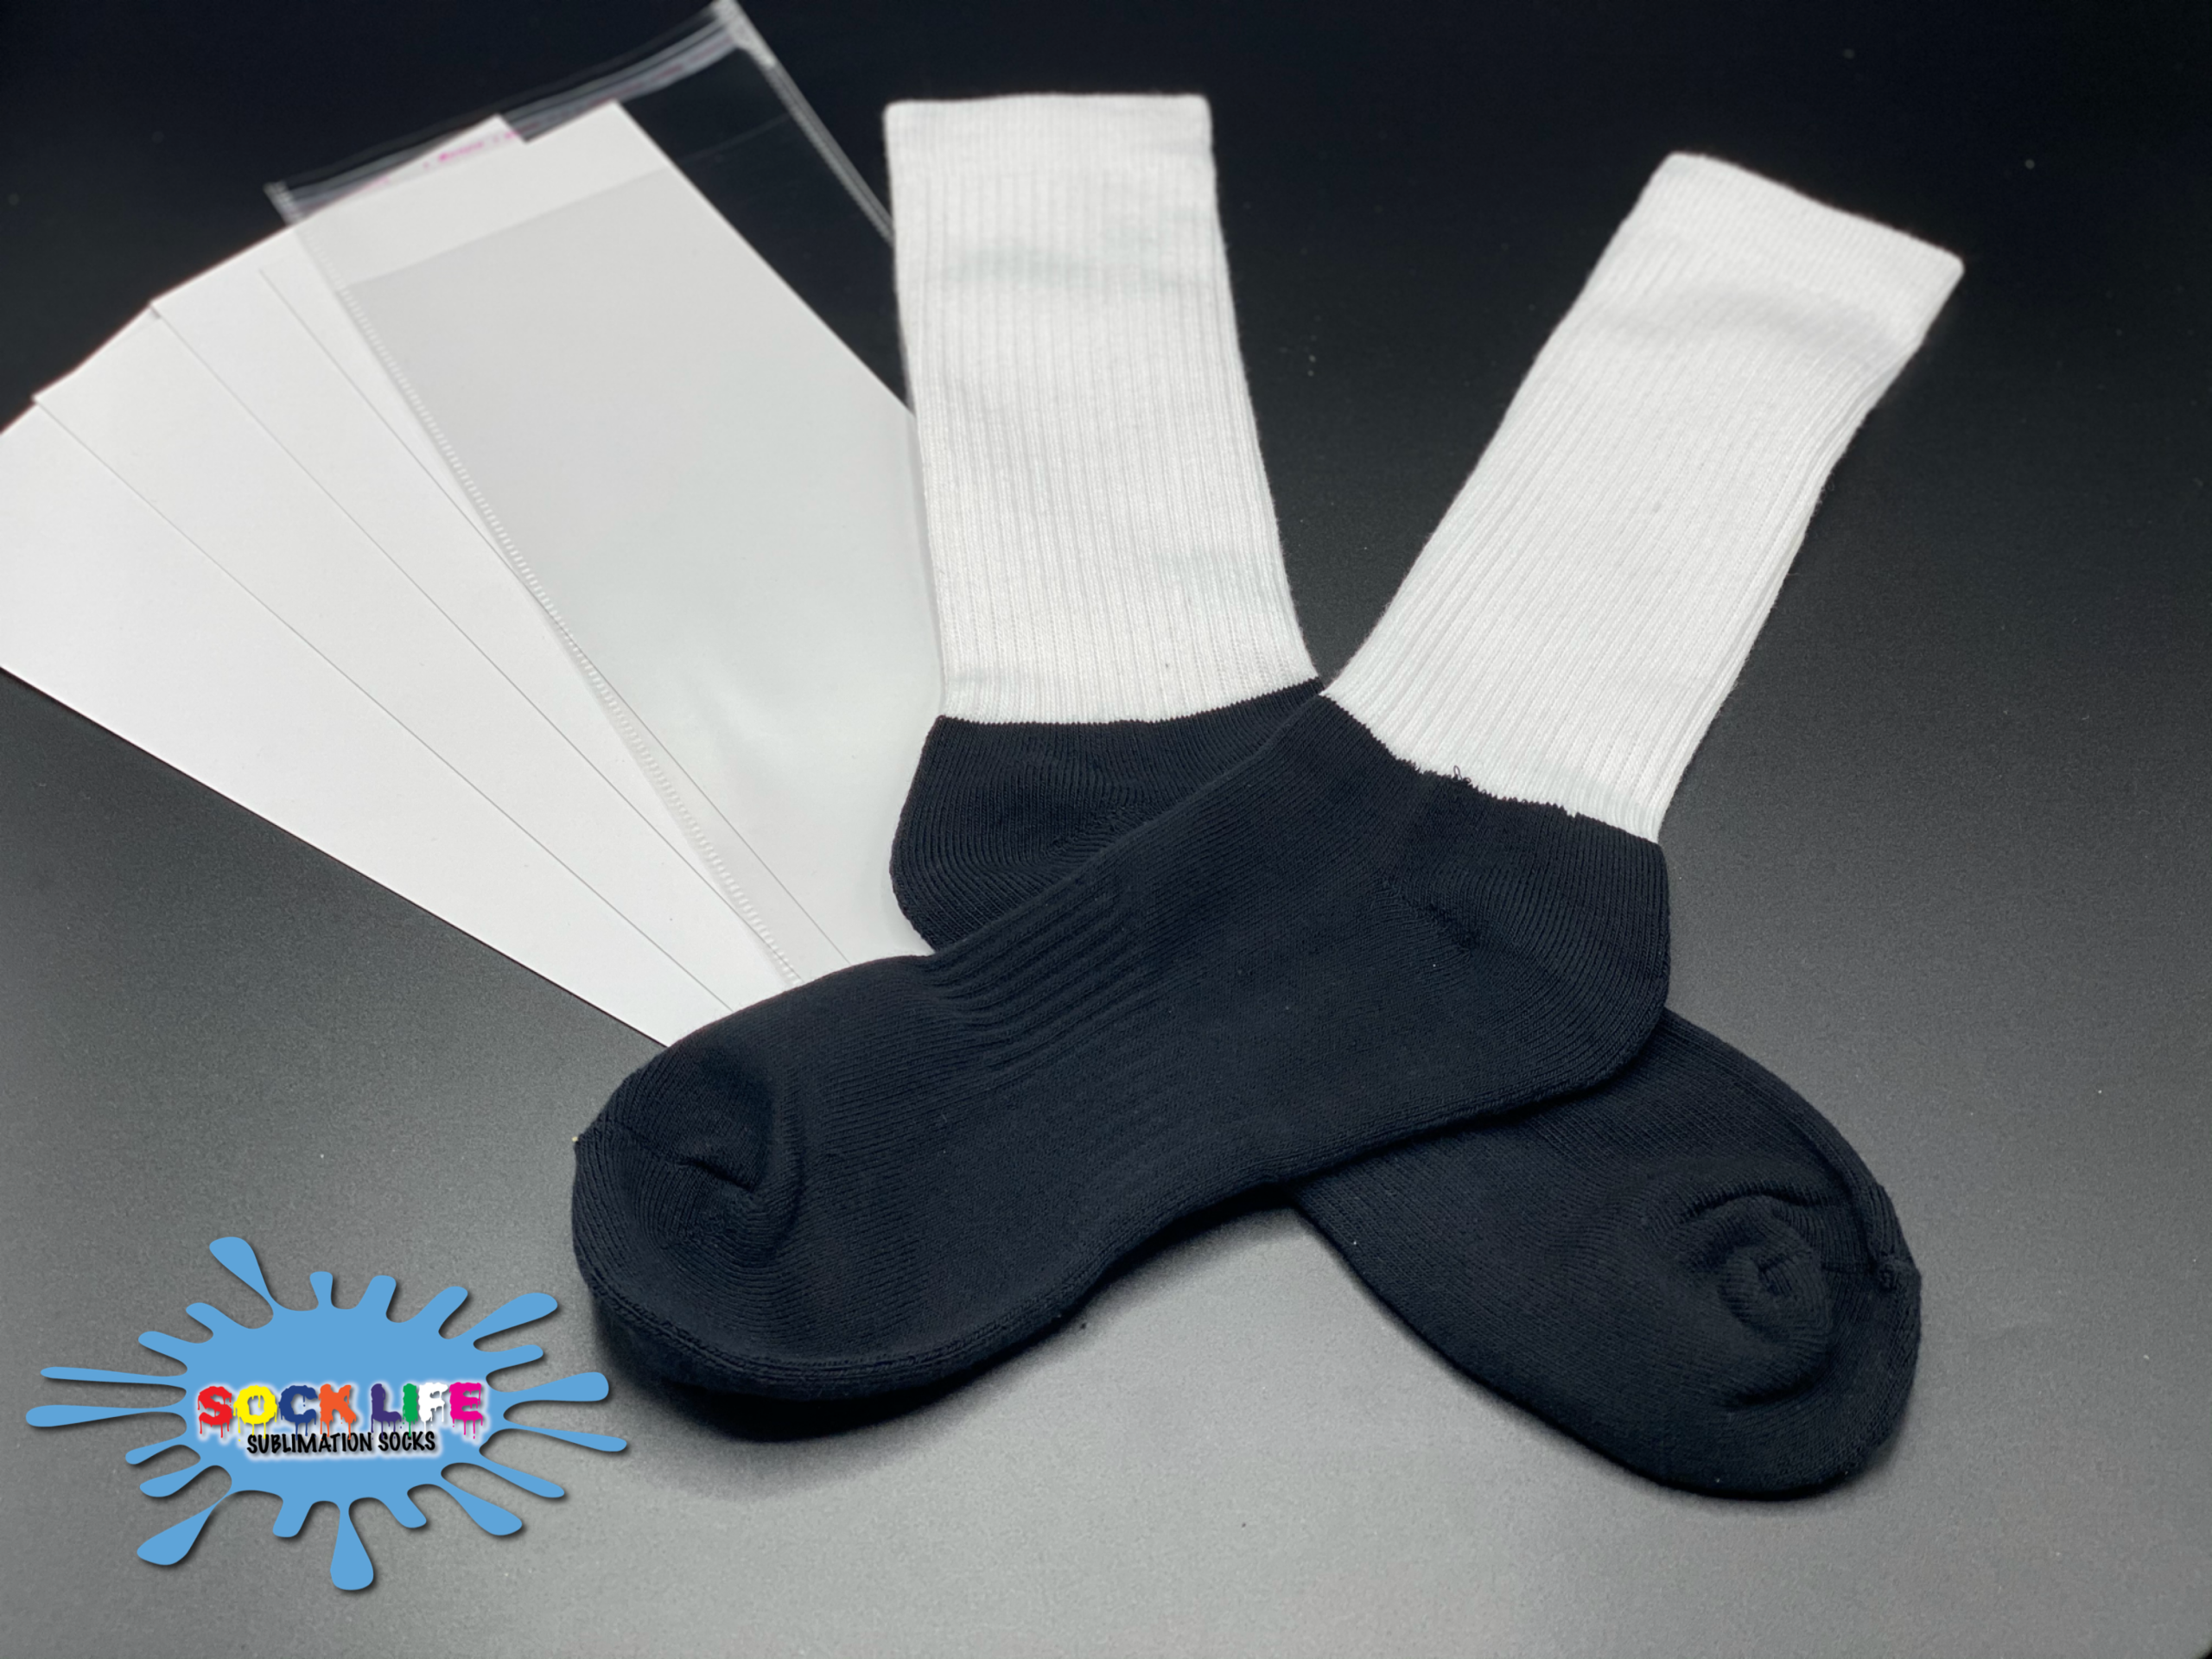 Sublimation Socks - The Biota Group